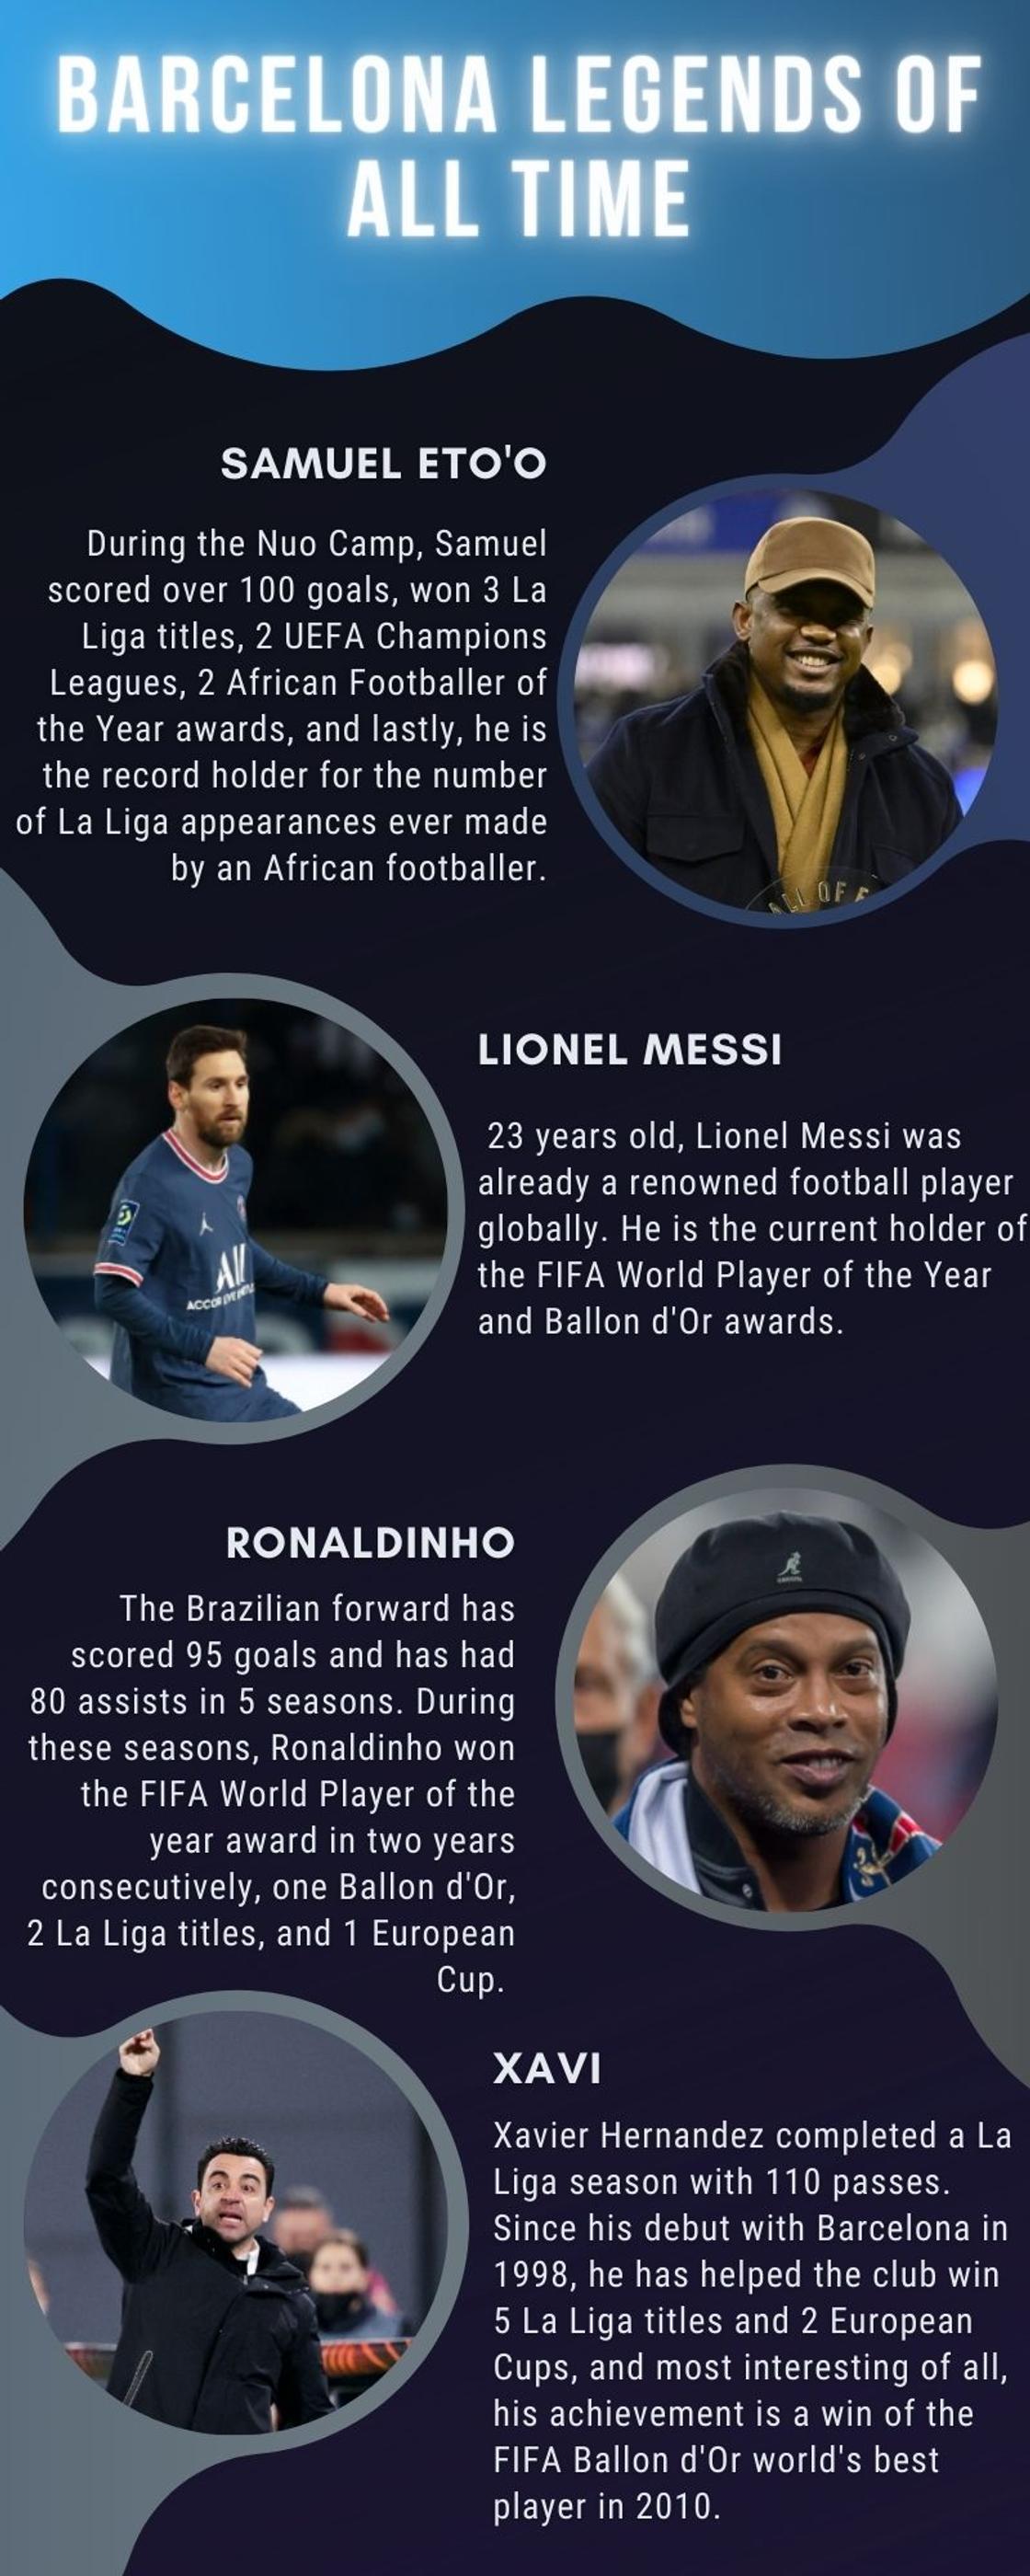 Barcelona legends of all time